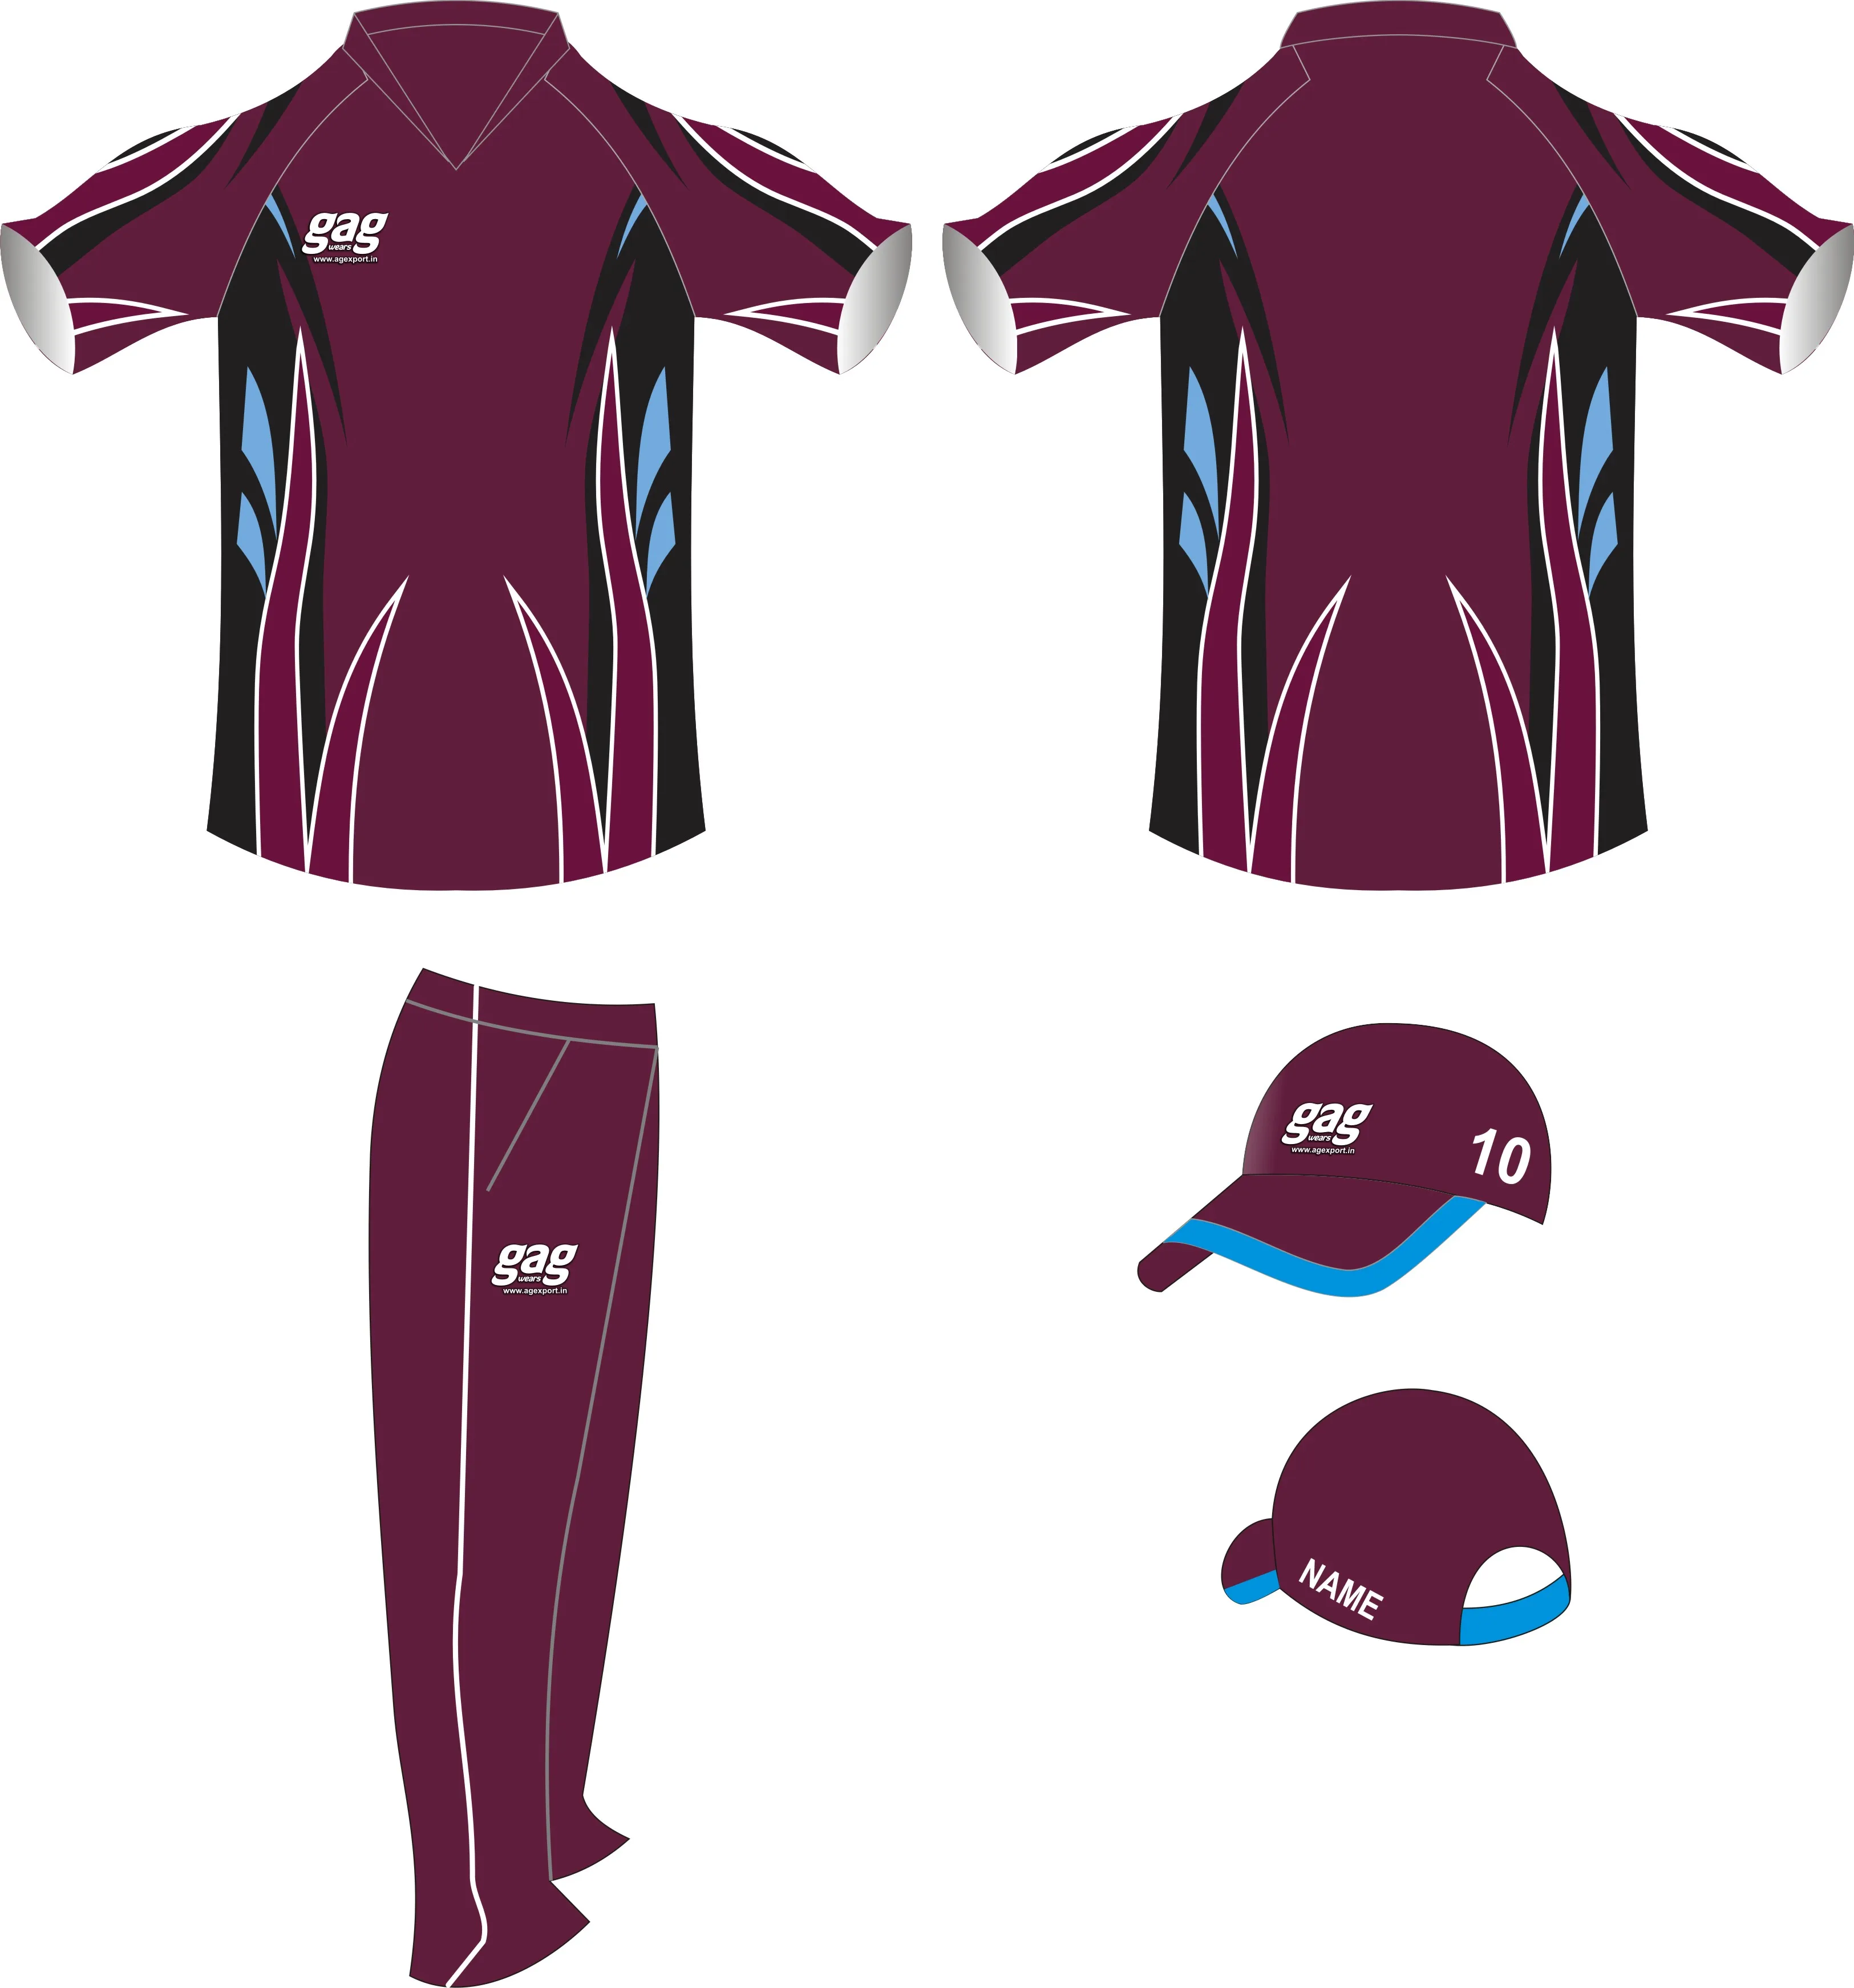 online cricket jersey store